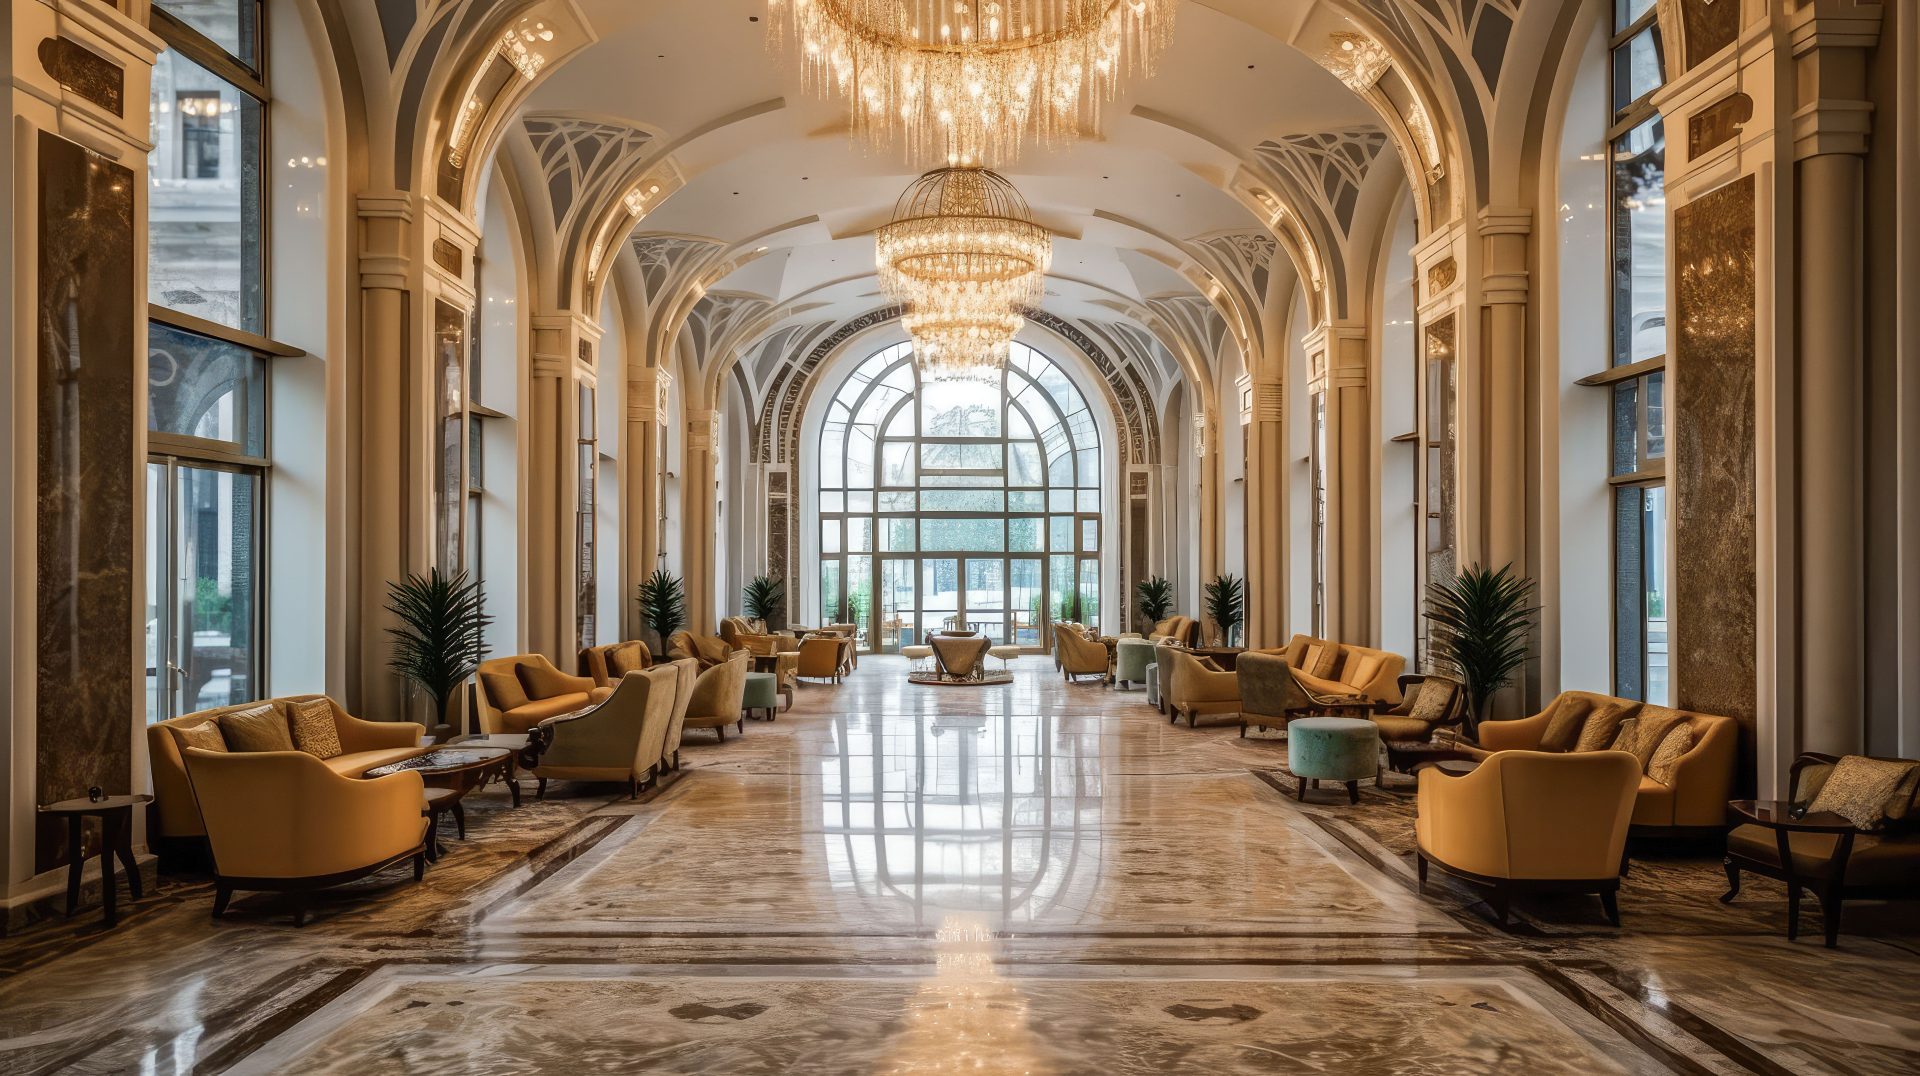 Image of a luxury hotel lobby.